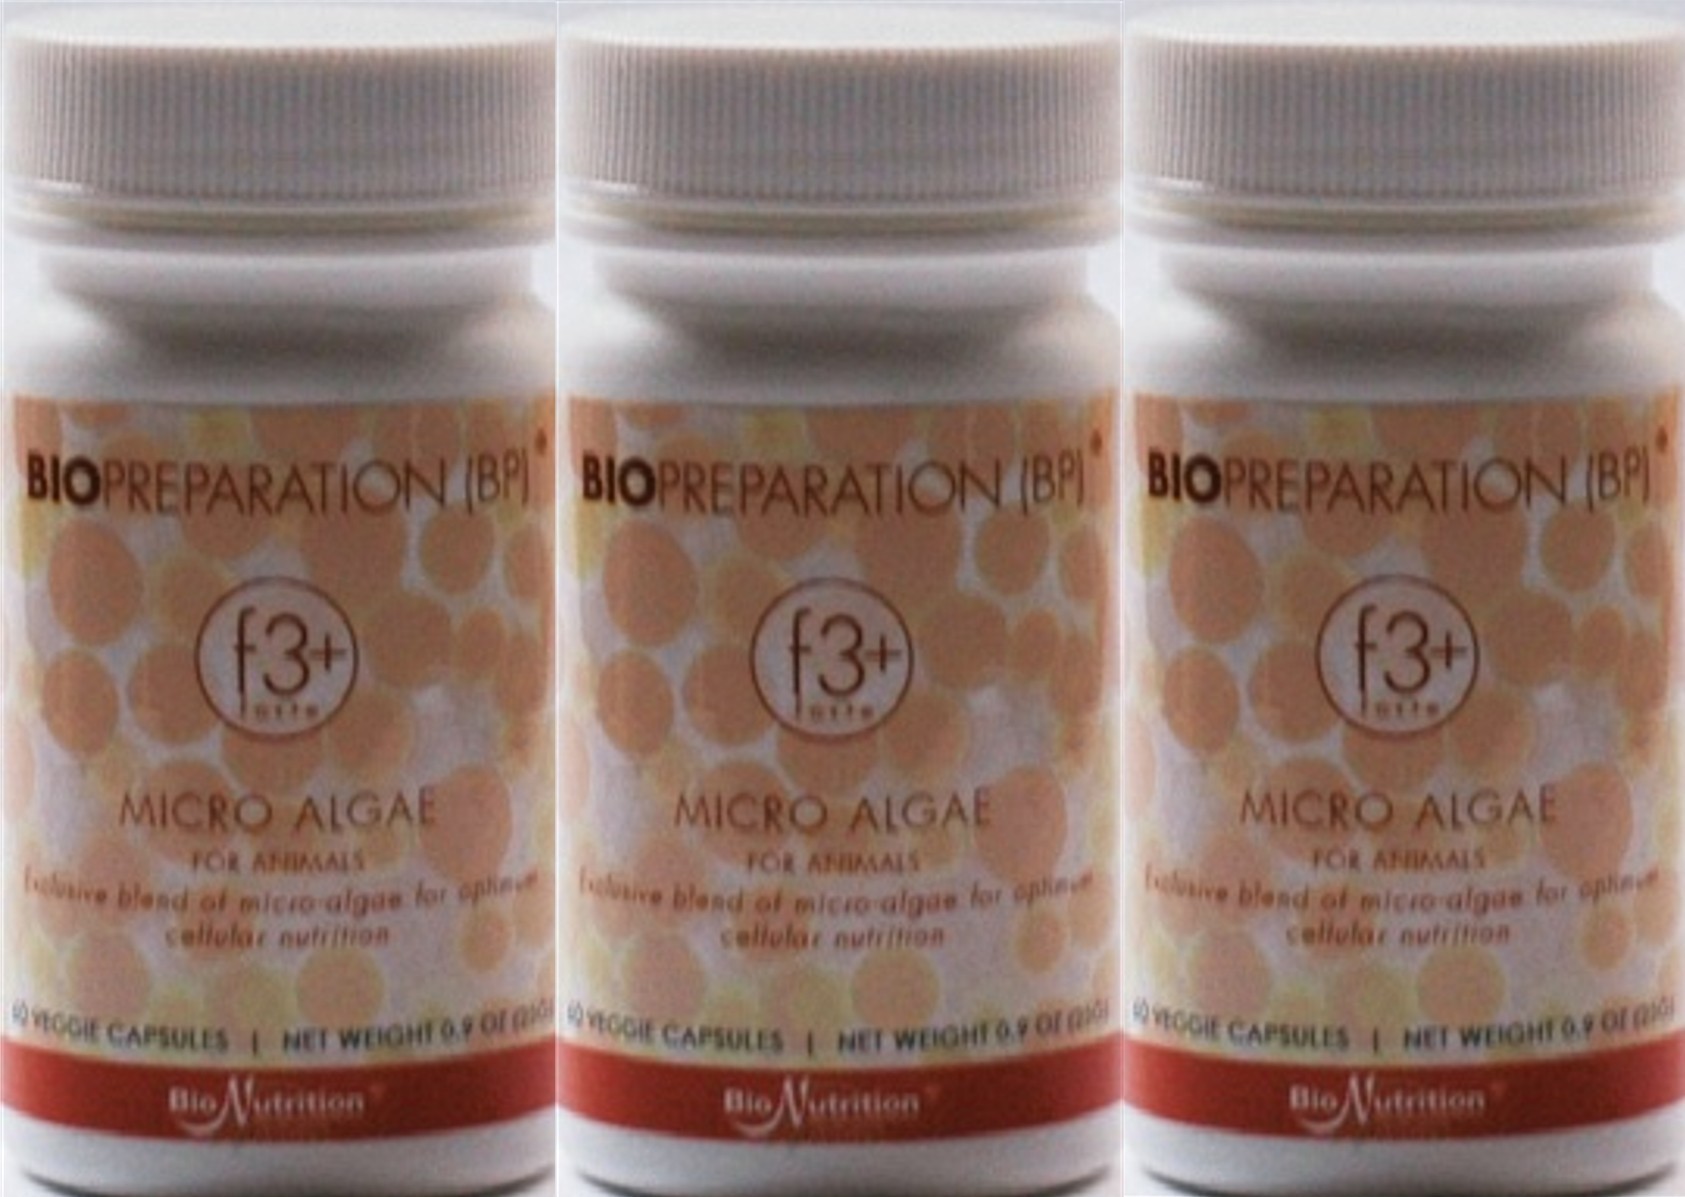 BioPreparation-f3+ three pack